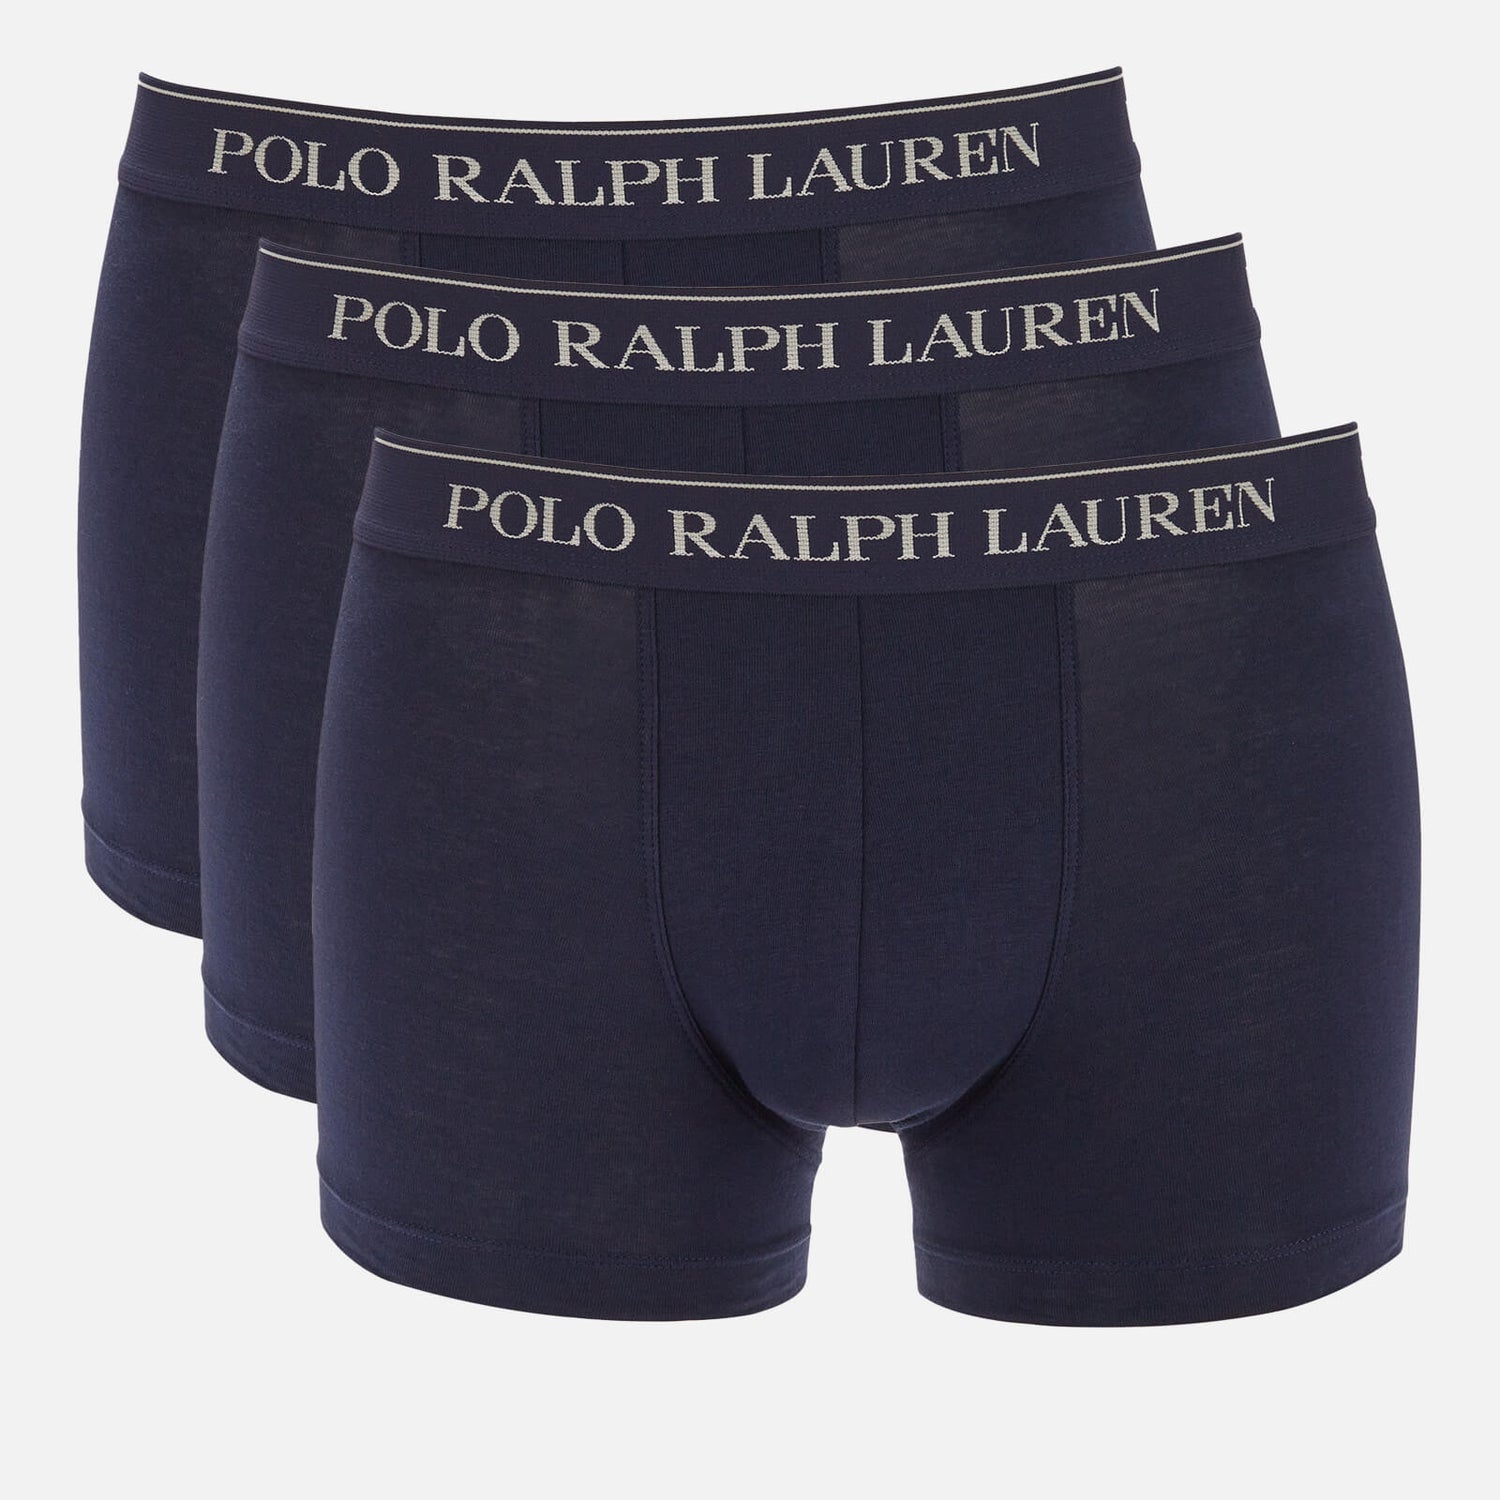 Polo Ralph Lauren Men's 3-Pack Trunk Boxers - Cruise Navy | TheHut.com